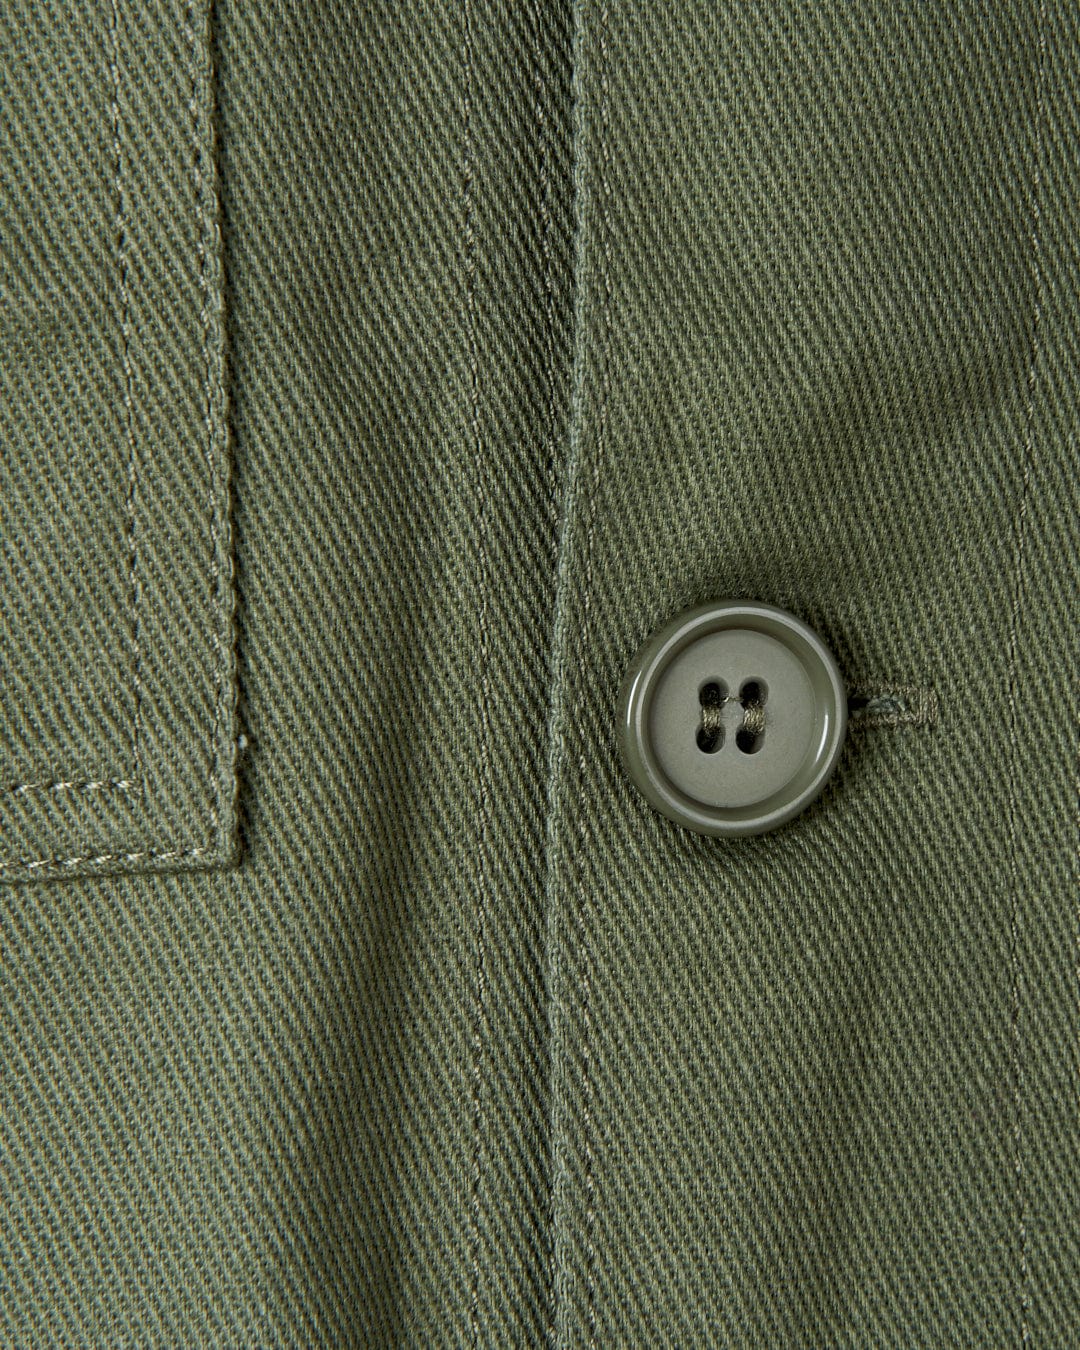 A close up of a button on a Saltrock Barden - Womens Lightweight Utility Jacket in Dark Green.